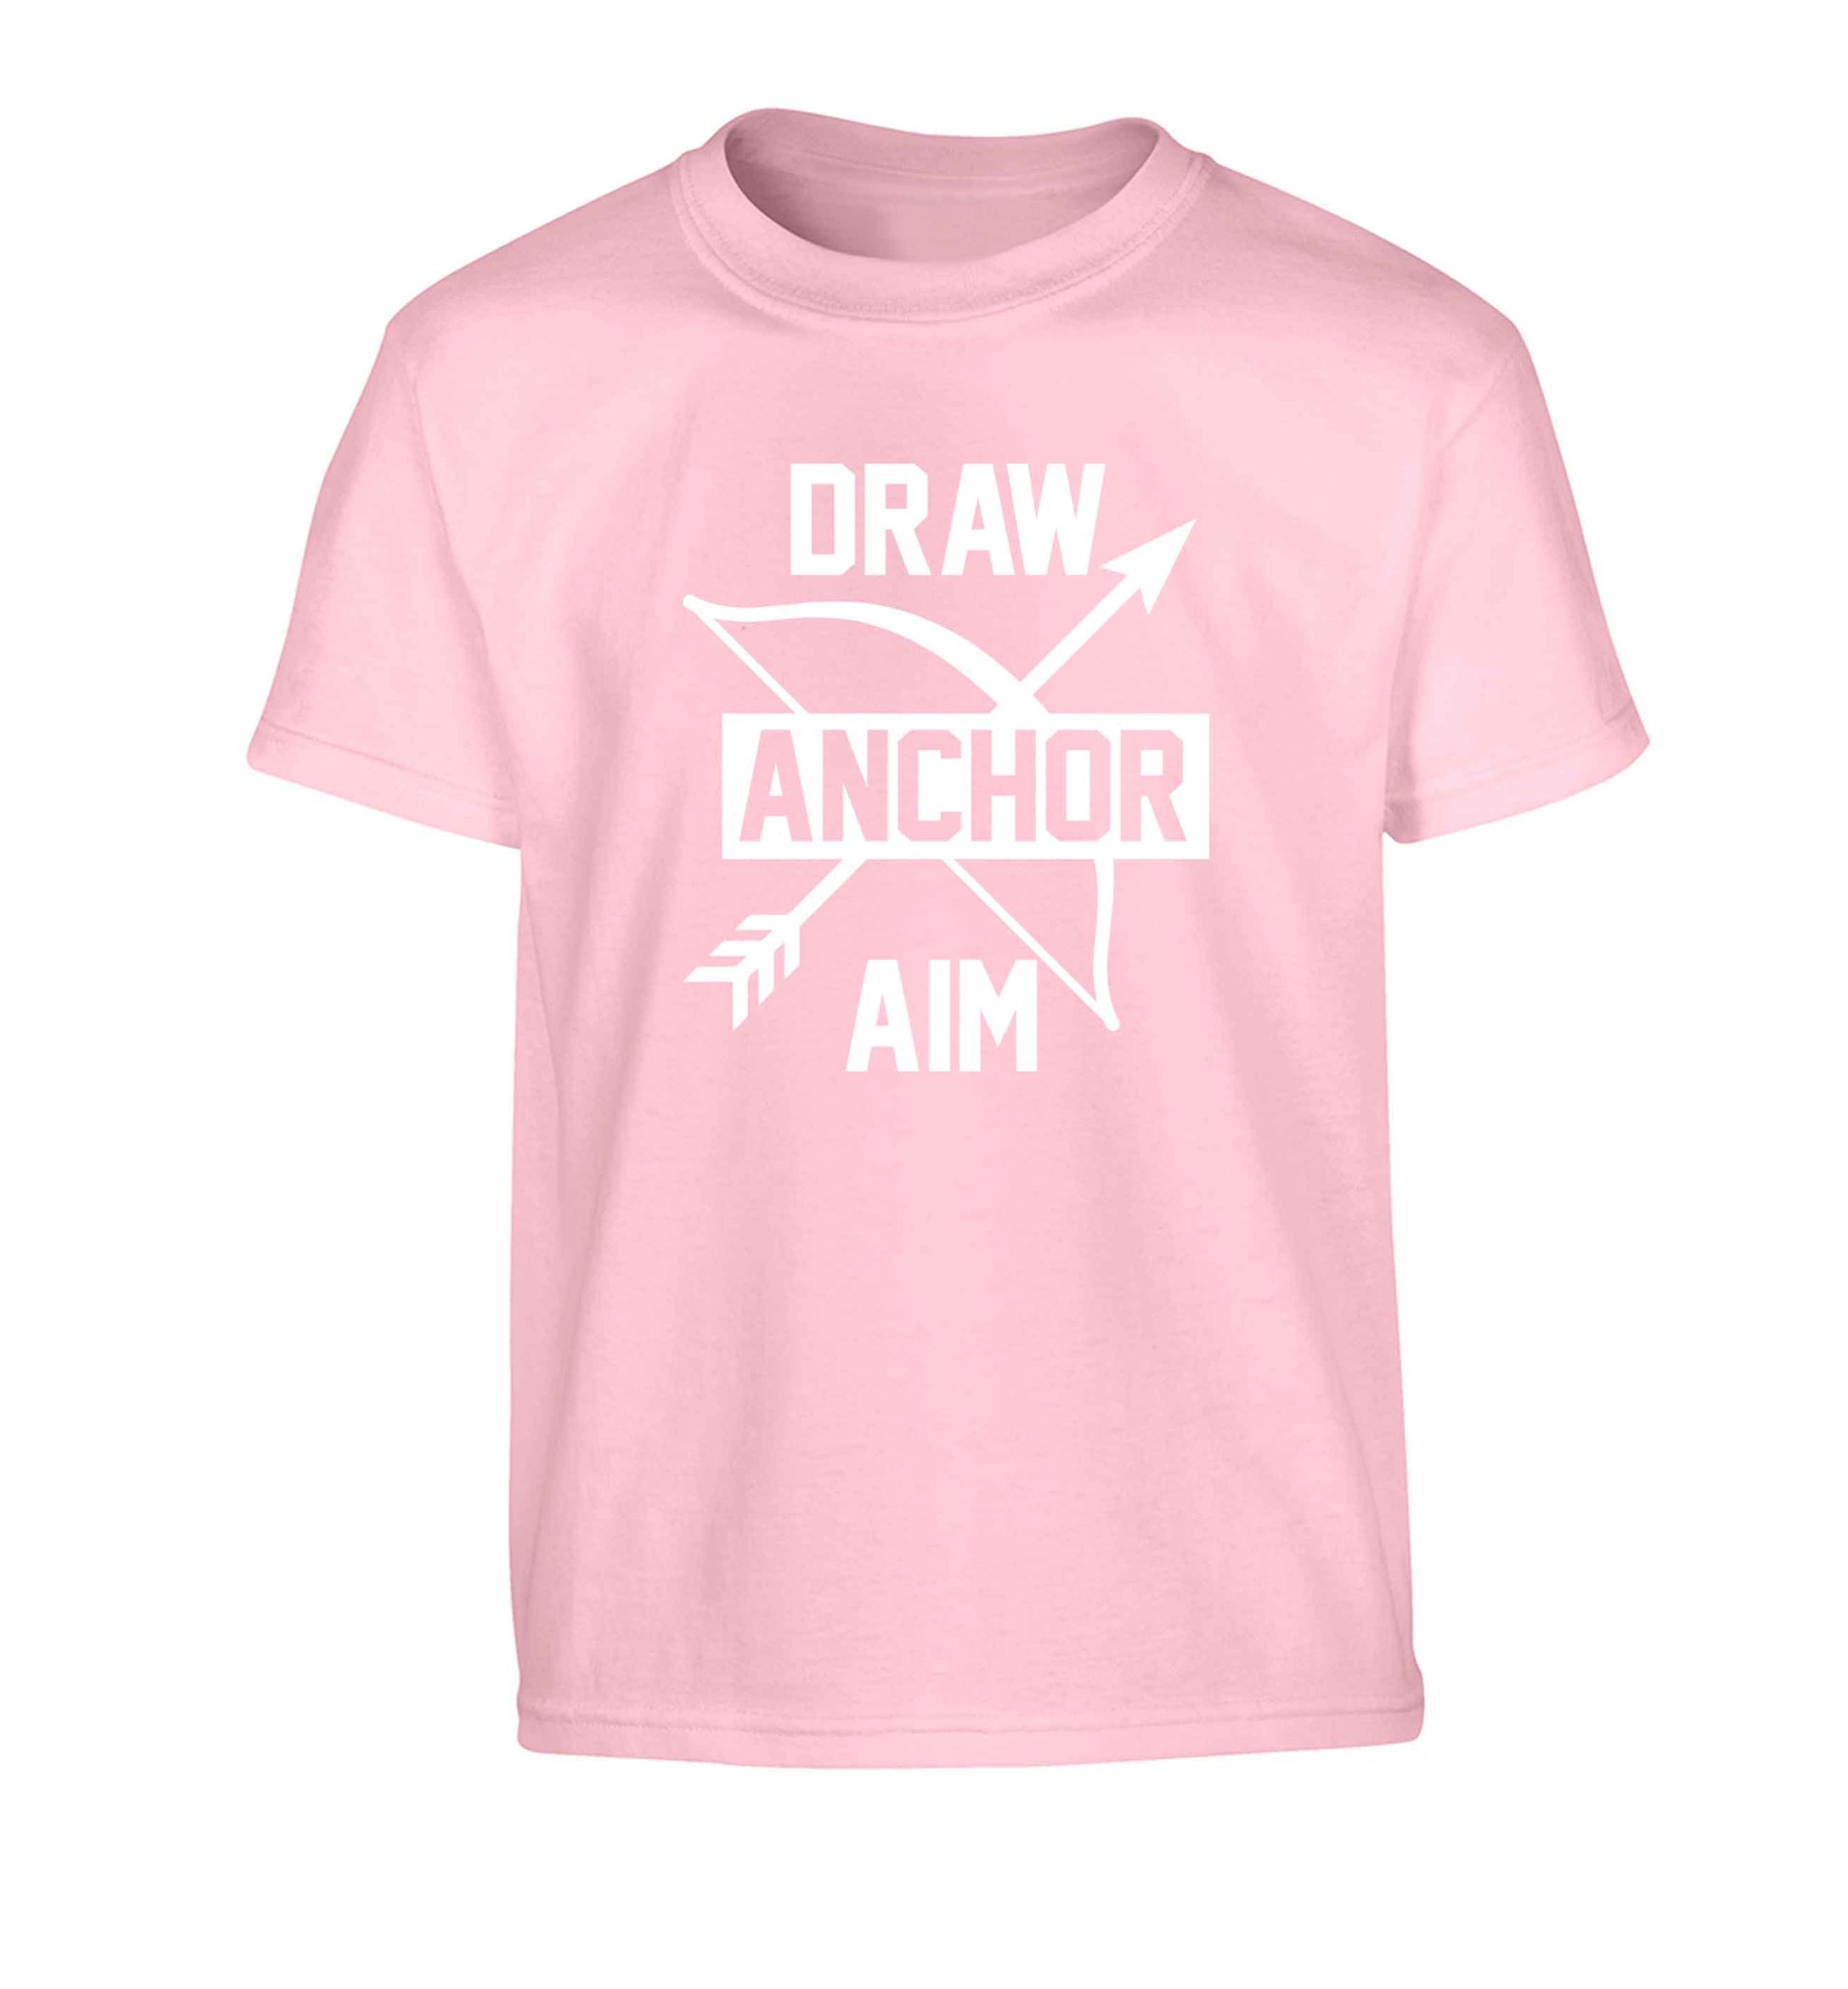 Draw anchor aim Children's light pink Tshirt 12-13 Years